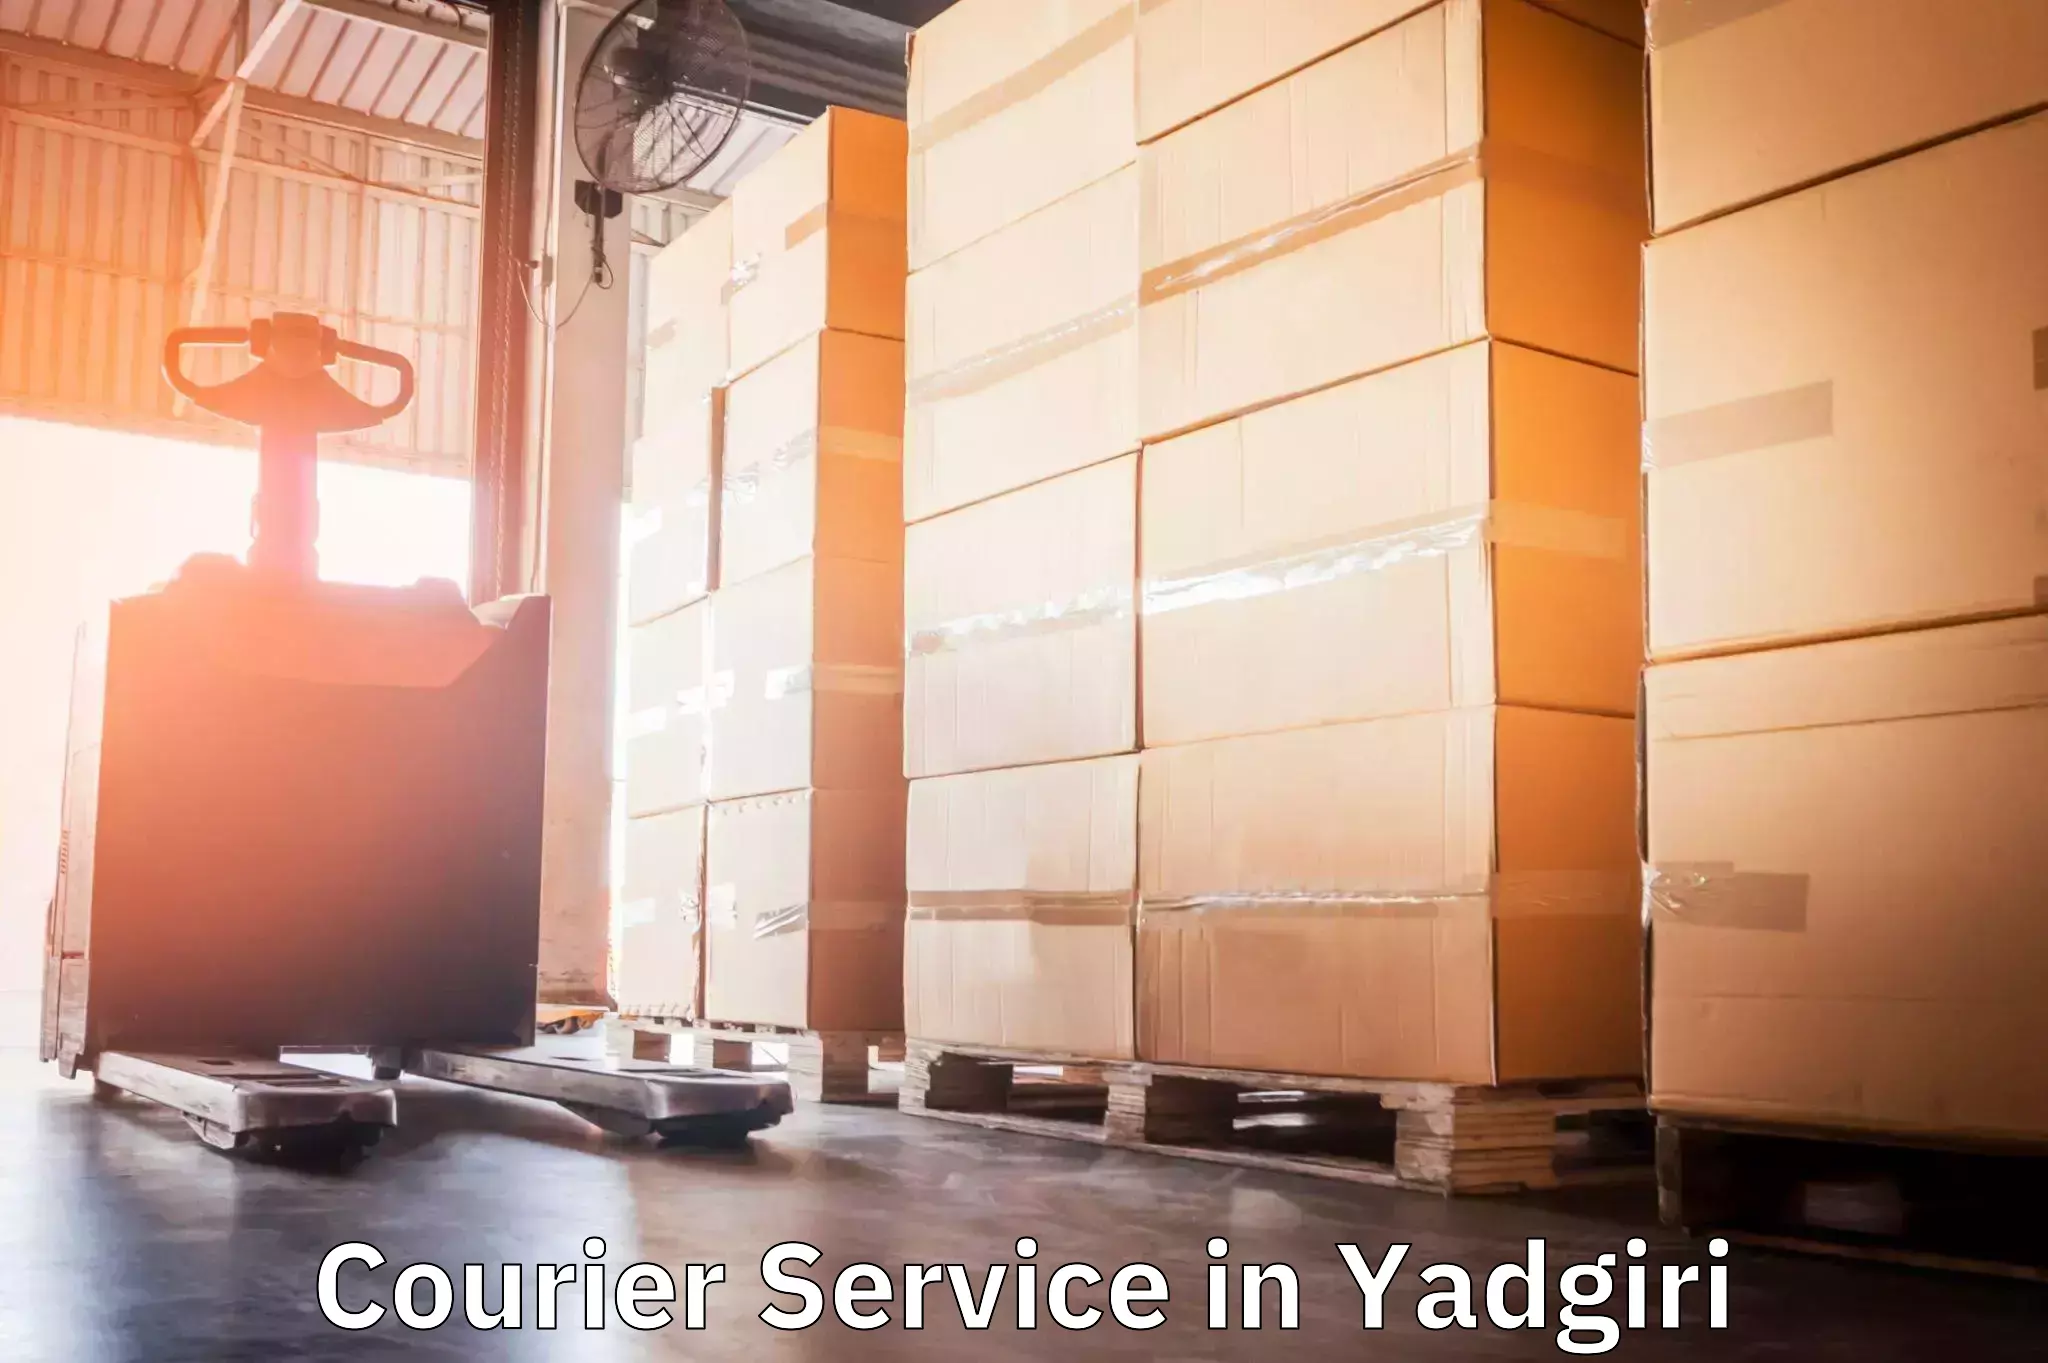 Next day courier in Yadgiri